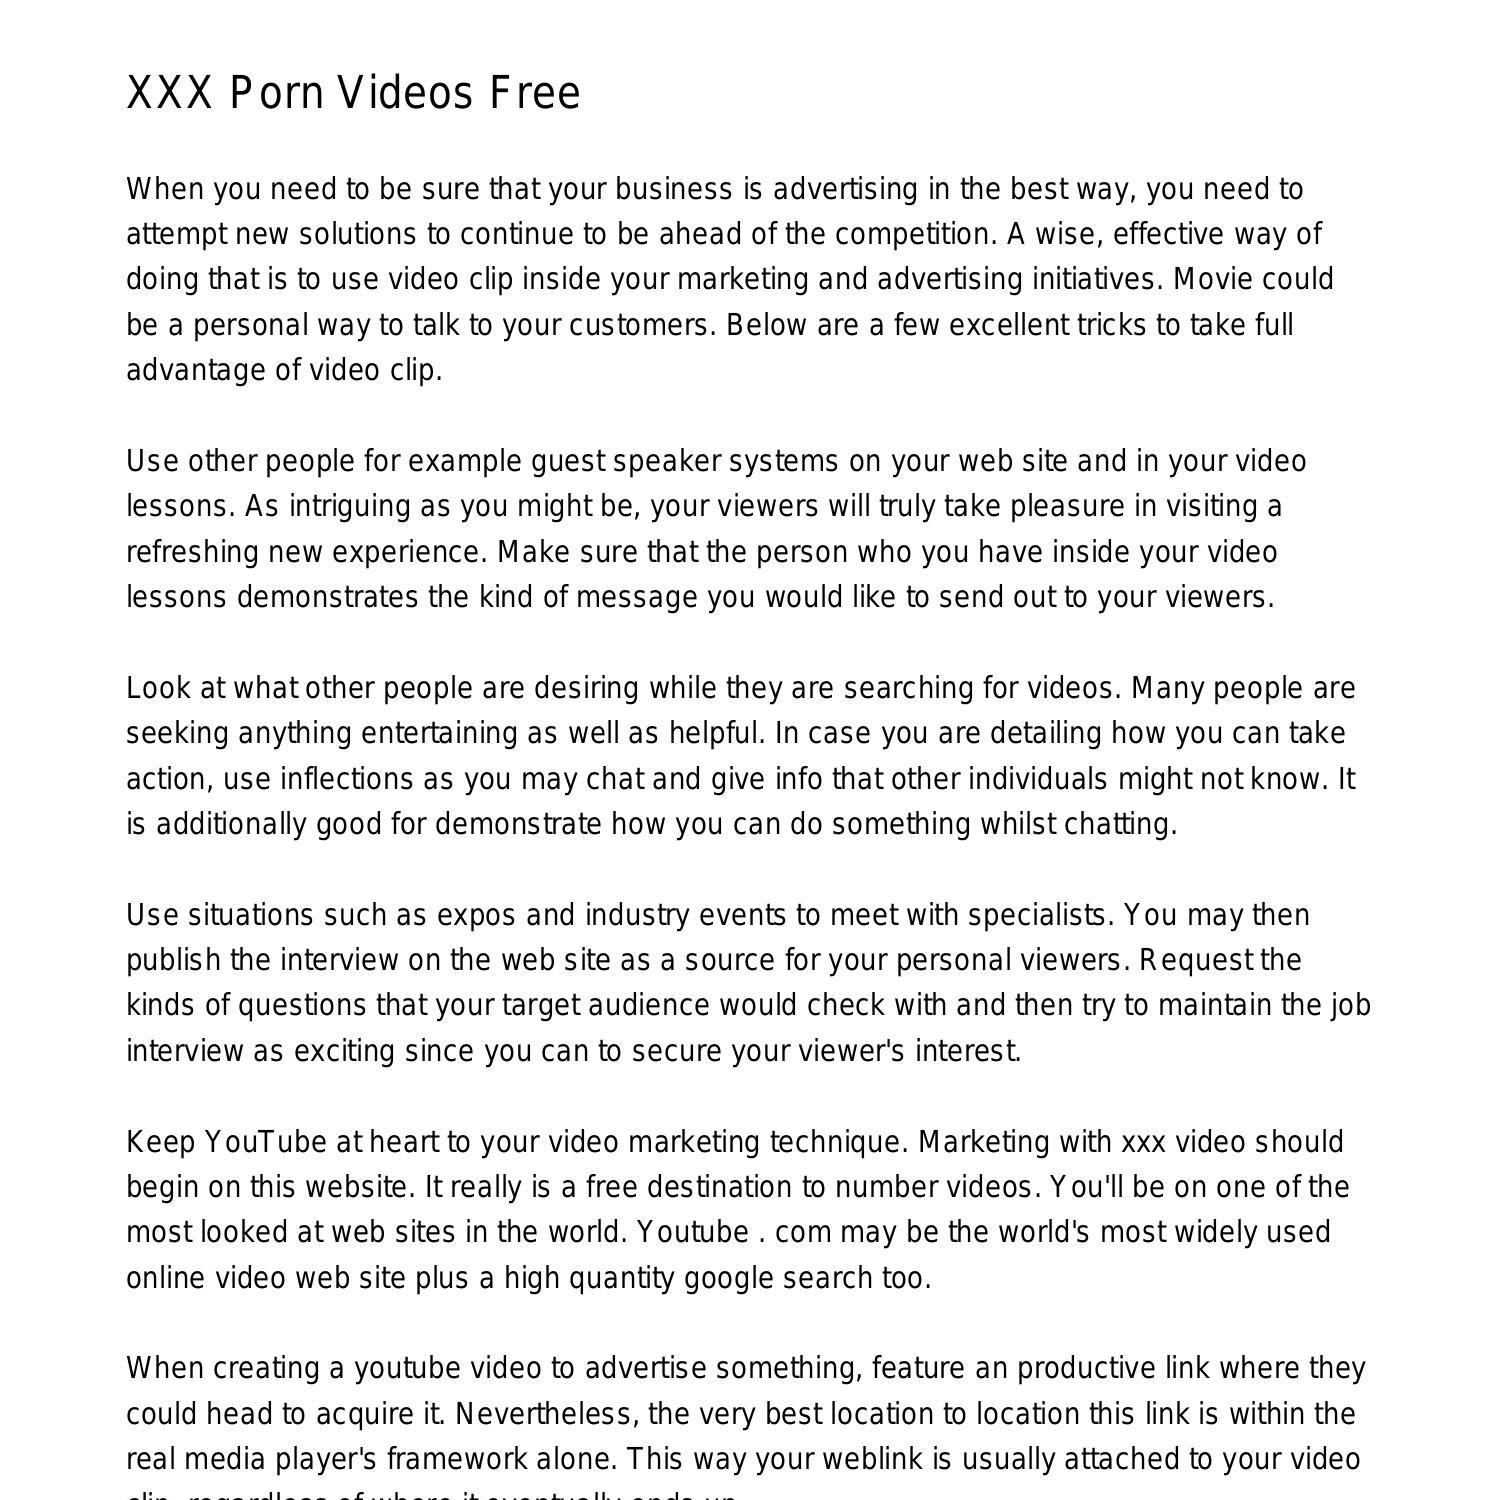 XXX Porn Videos Freebtxqh.pdf.pdf | DocDroid